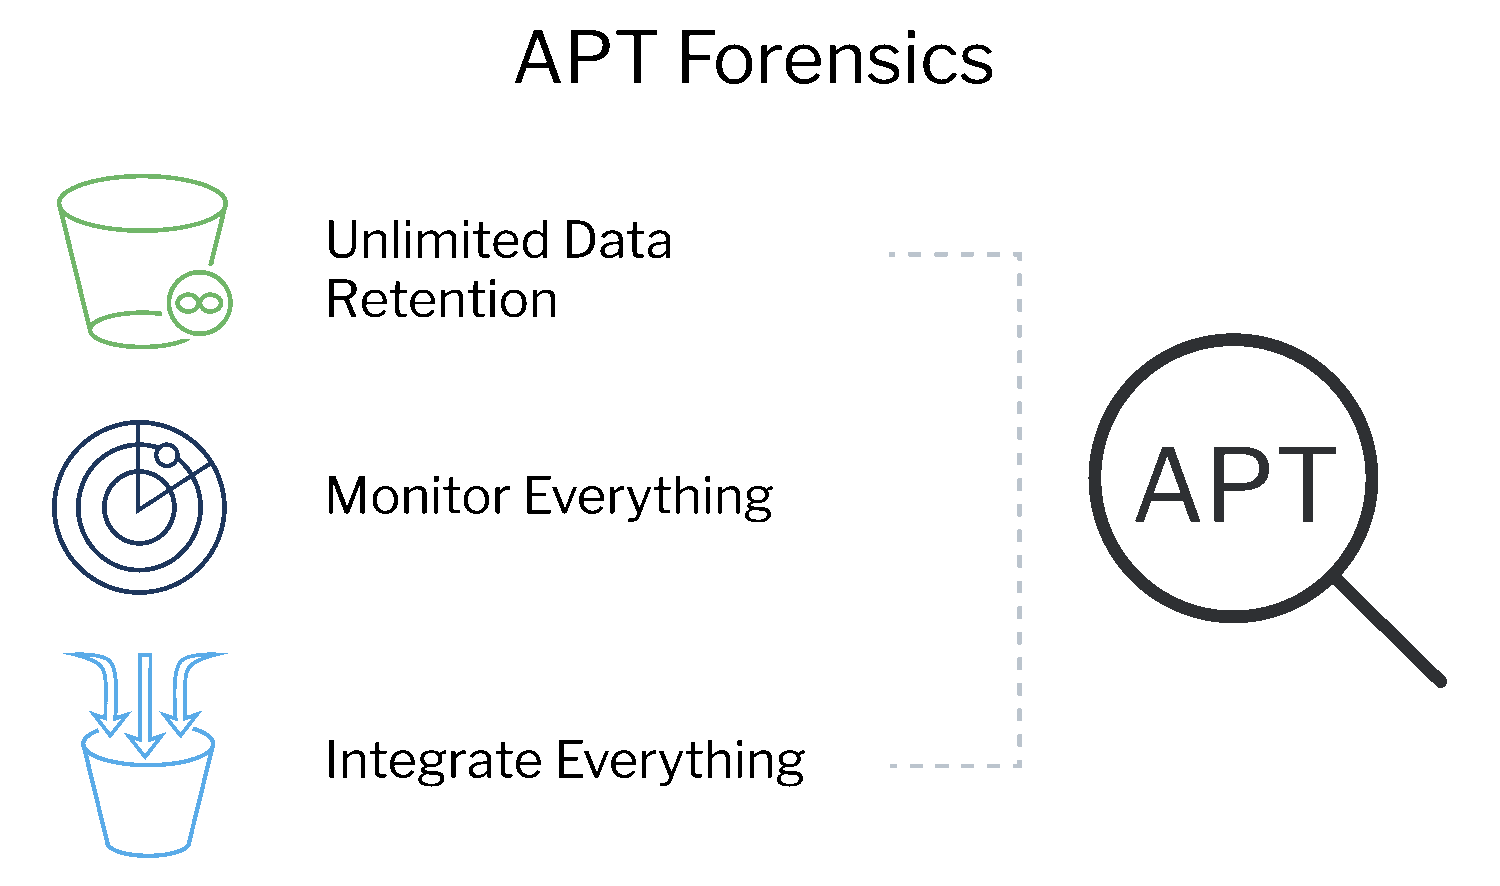 APT Forensics for SecOps